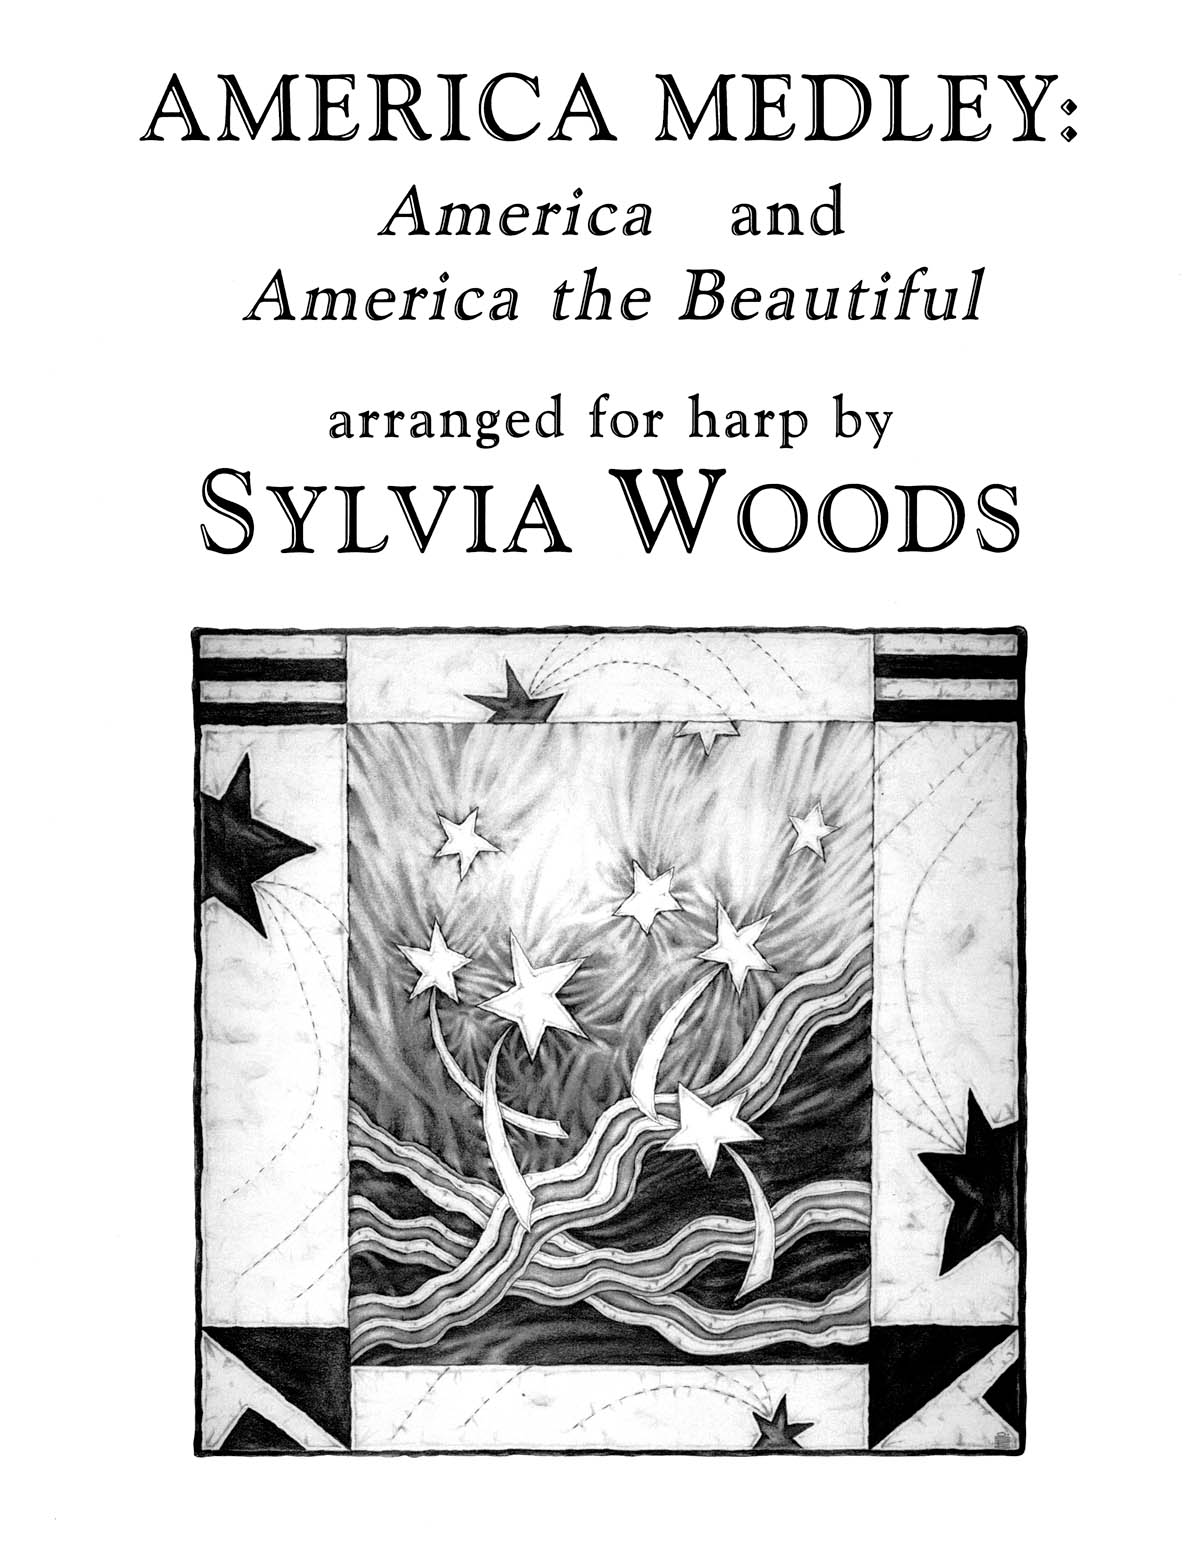 America Medley: America and America the Beautiful (Harp)